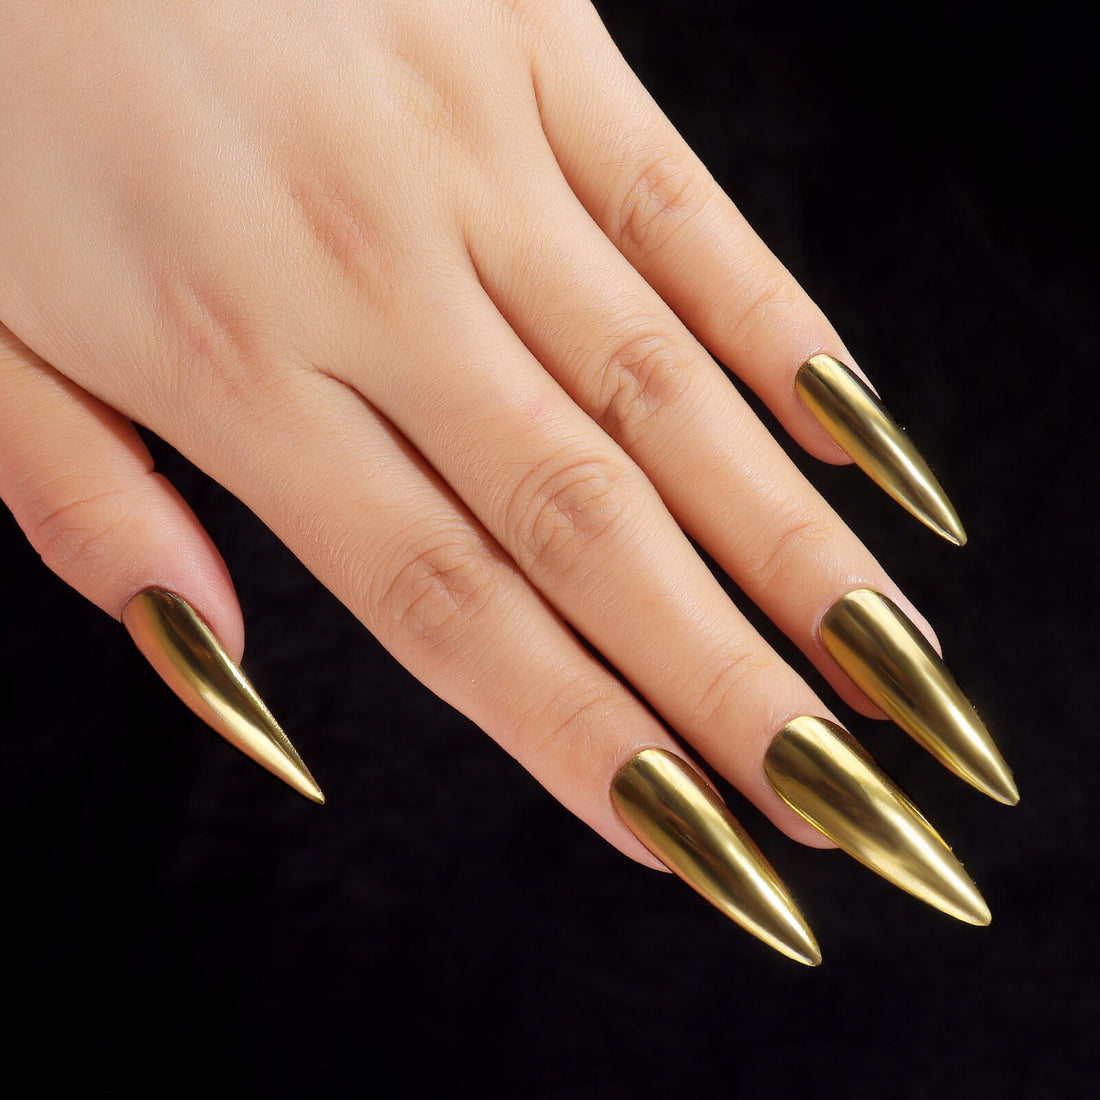 nail-art-chrome-powder-gold-mirror-nails